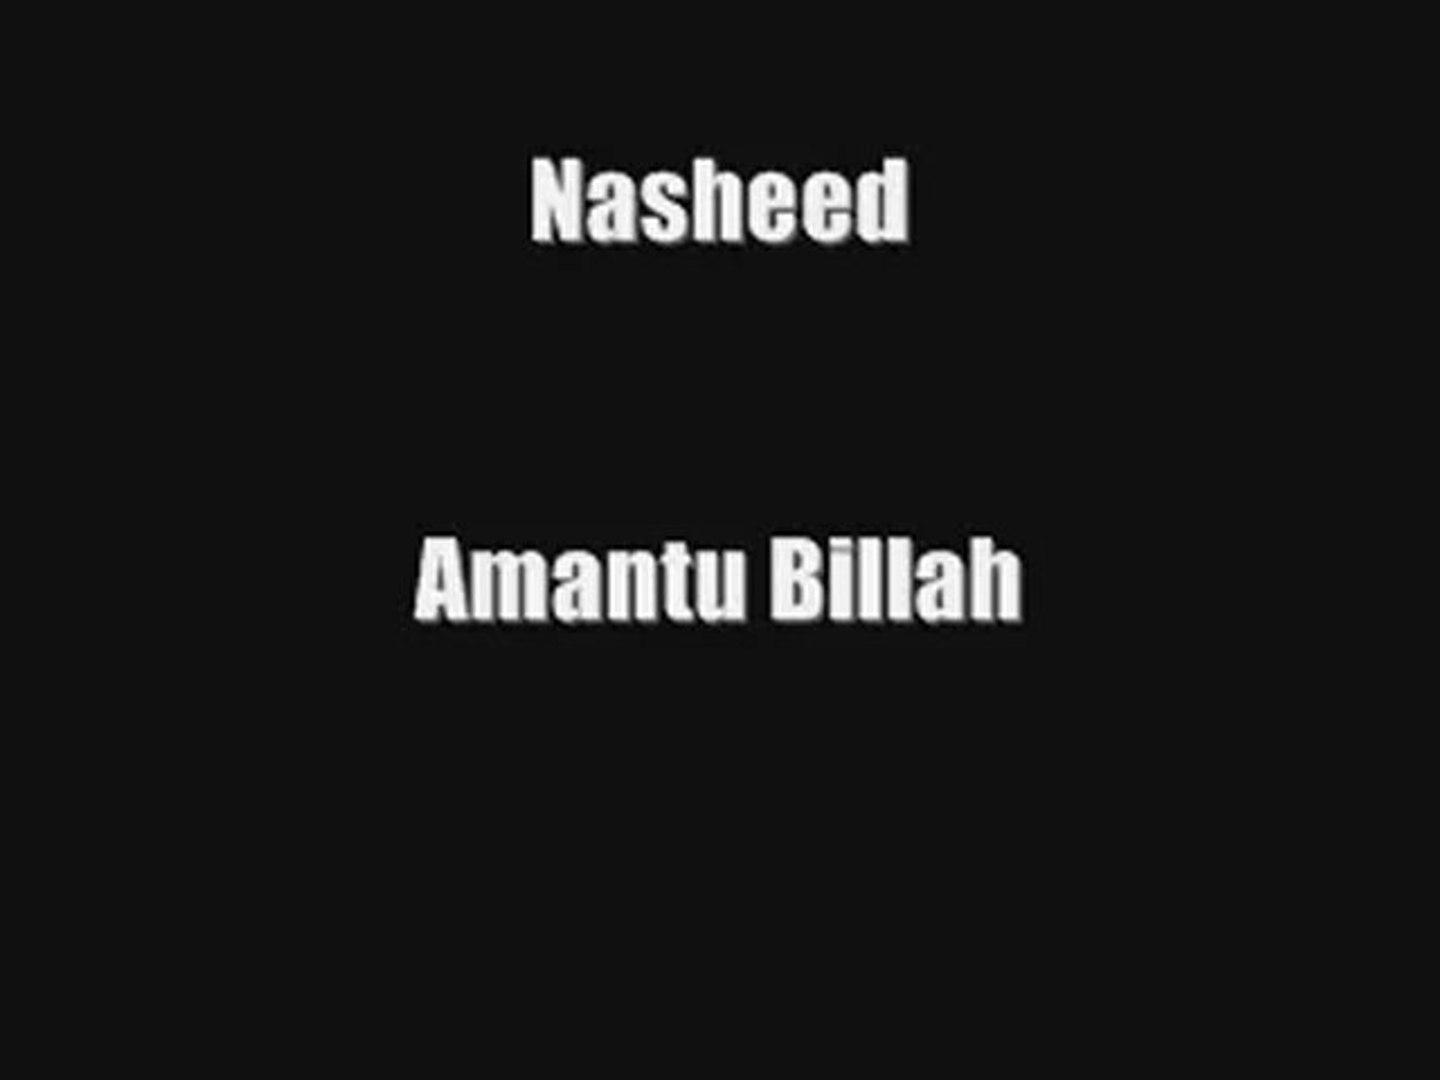 Аманту. Amantu Billahi Nasheed. Аманту билляхи нашид. Фото Amantu Billah. Аманту билляхи текст.